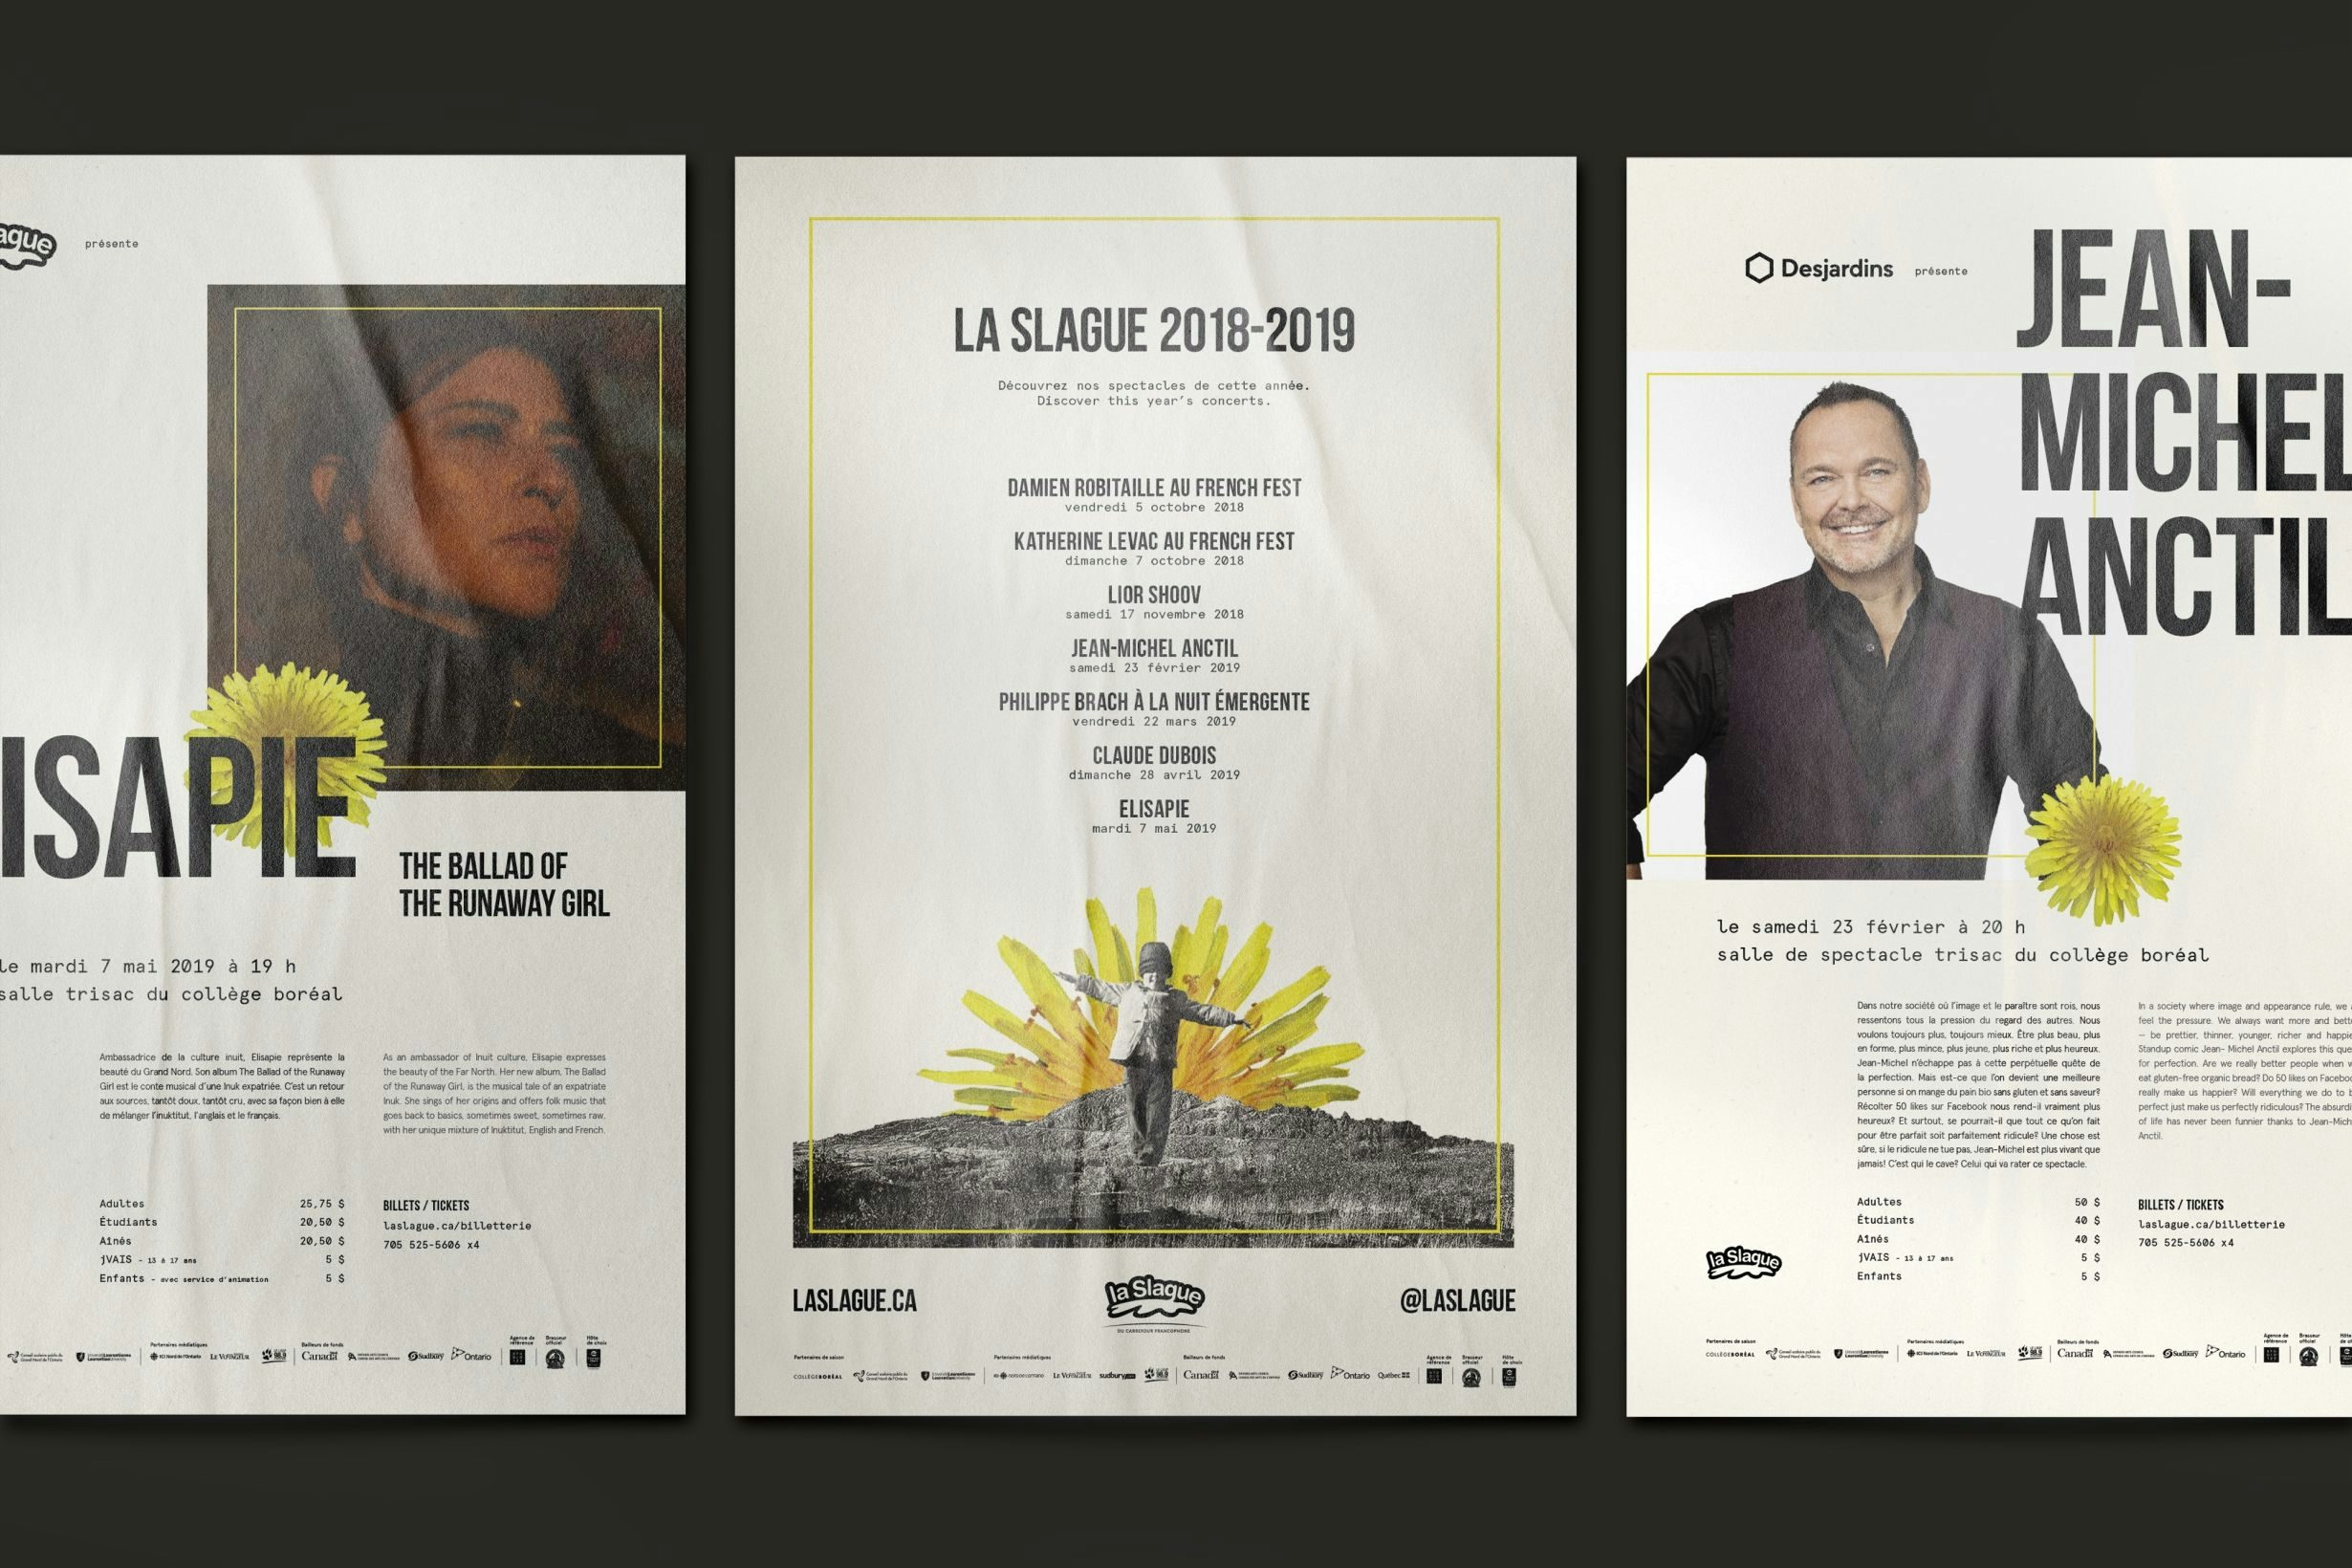 Series of event posters for La Slague's 2018-2019 season